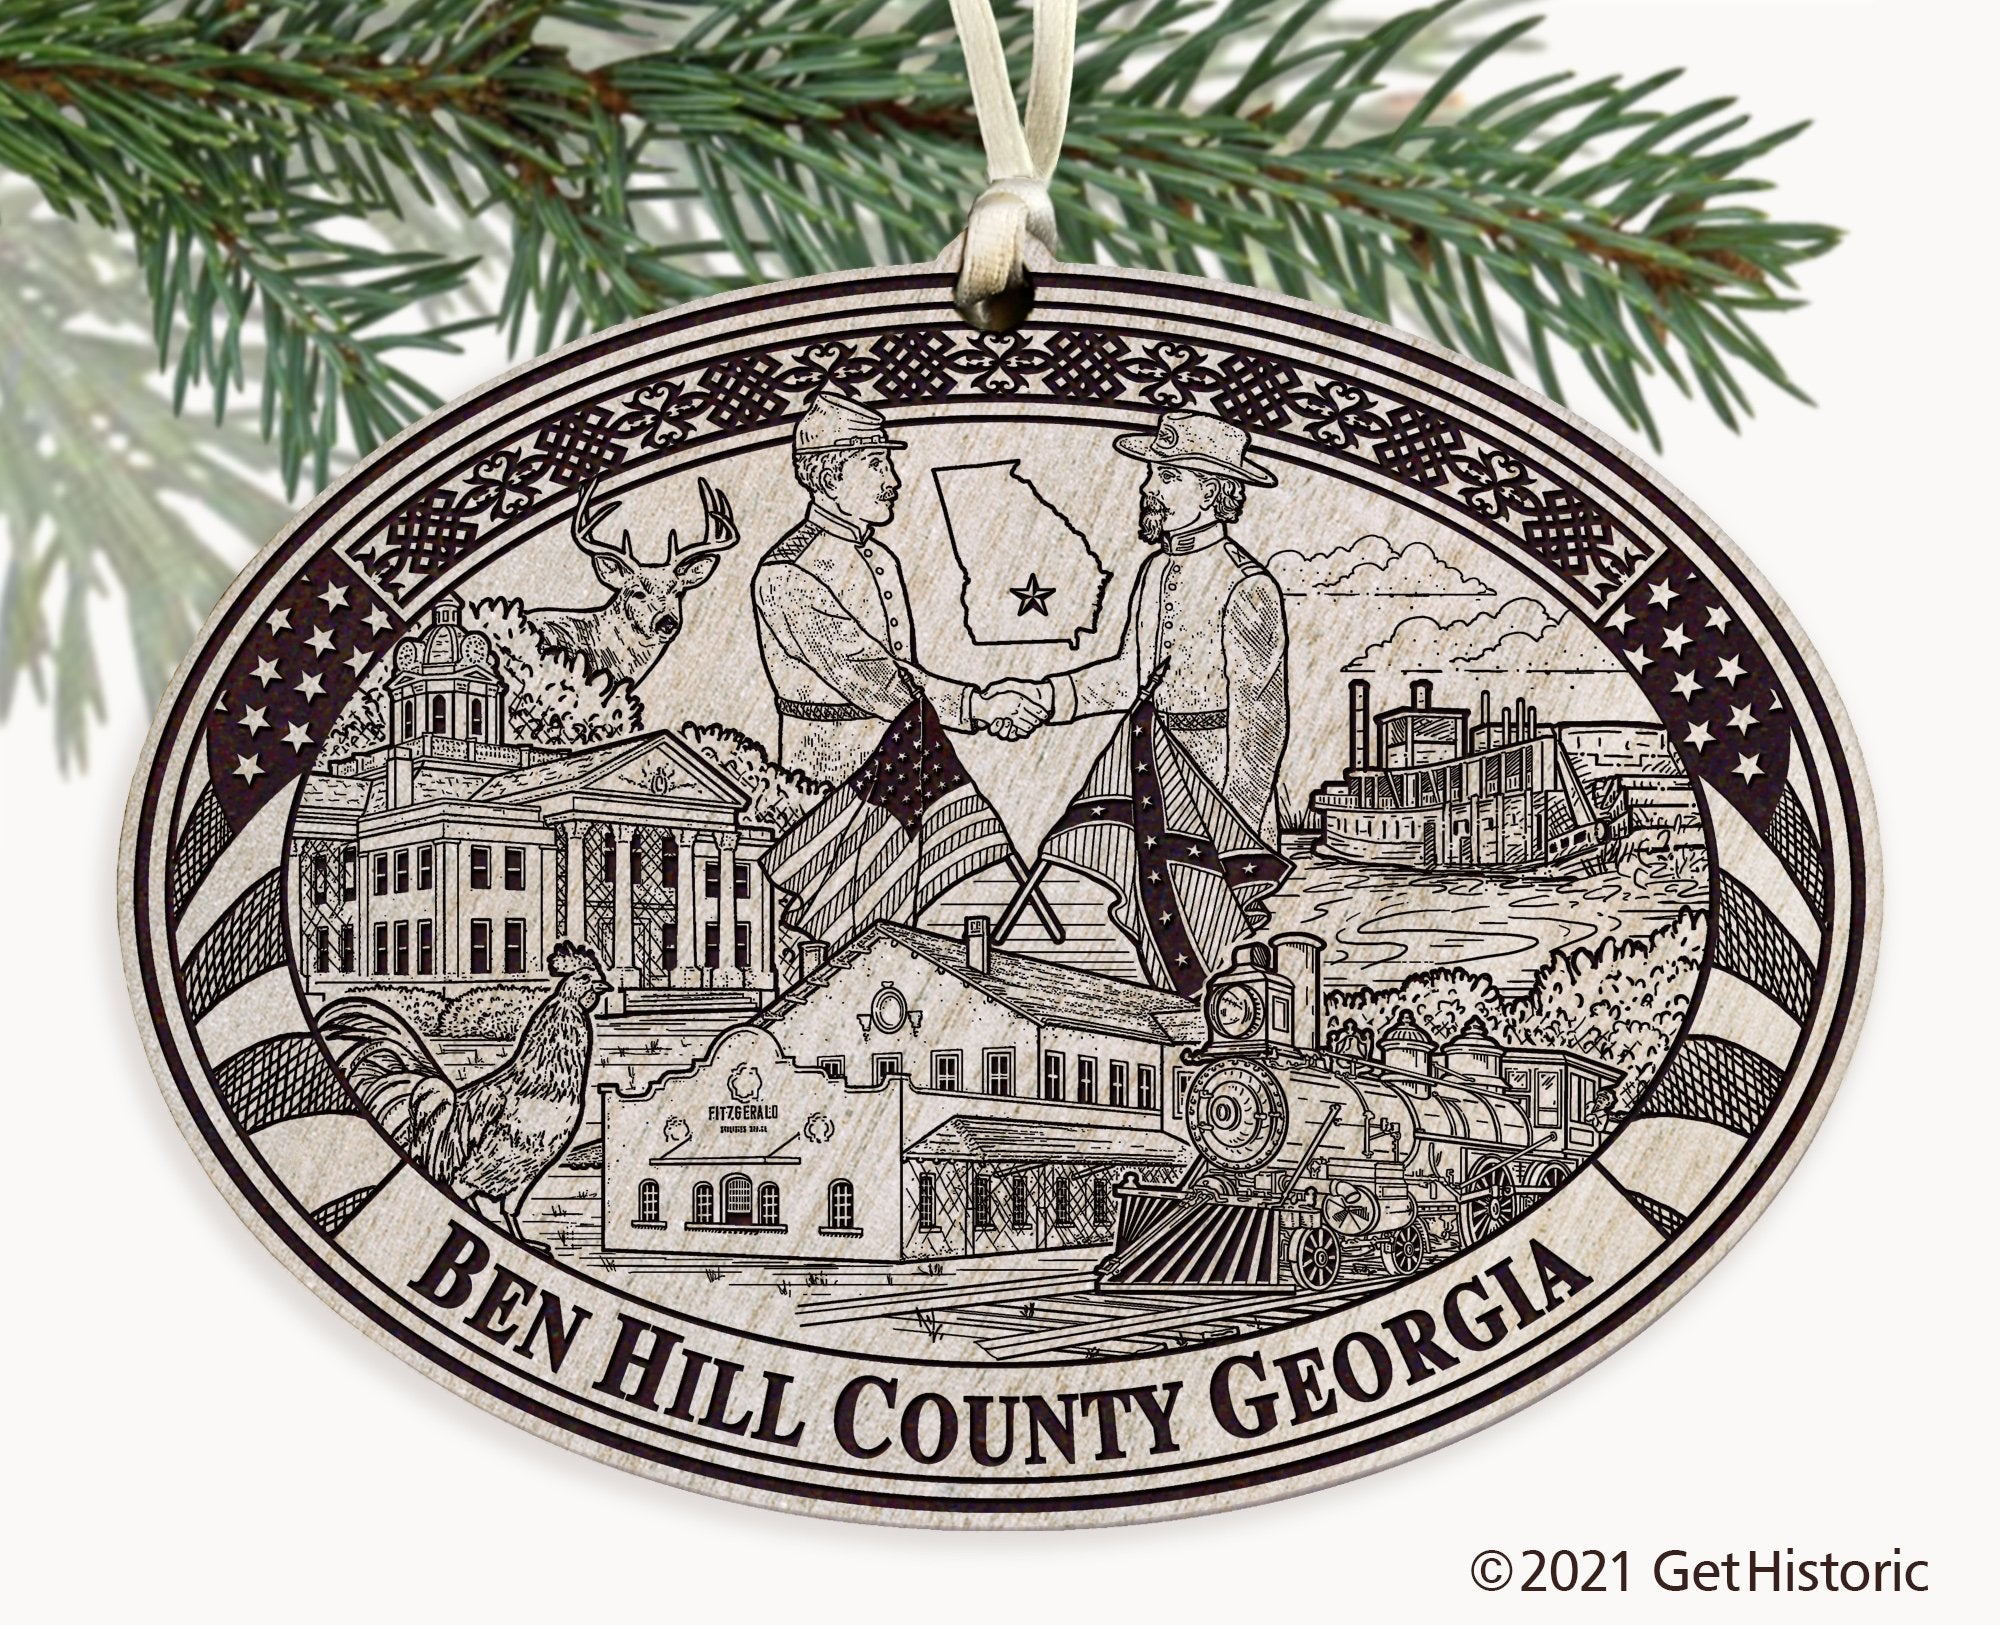 Ben Hill County Georgia Engraved Ornament